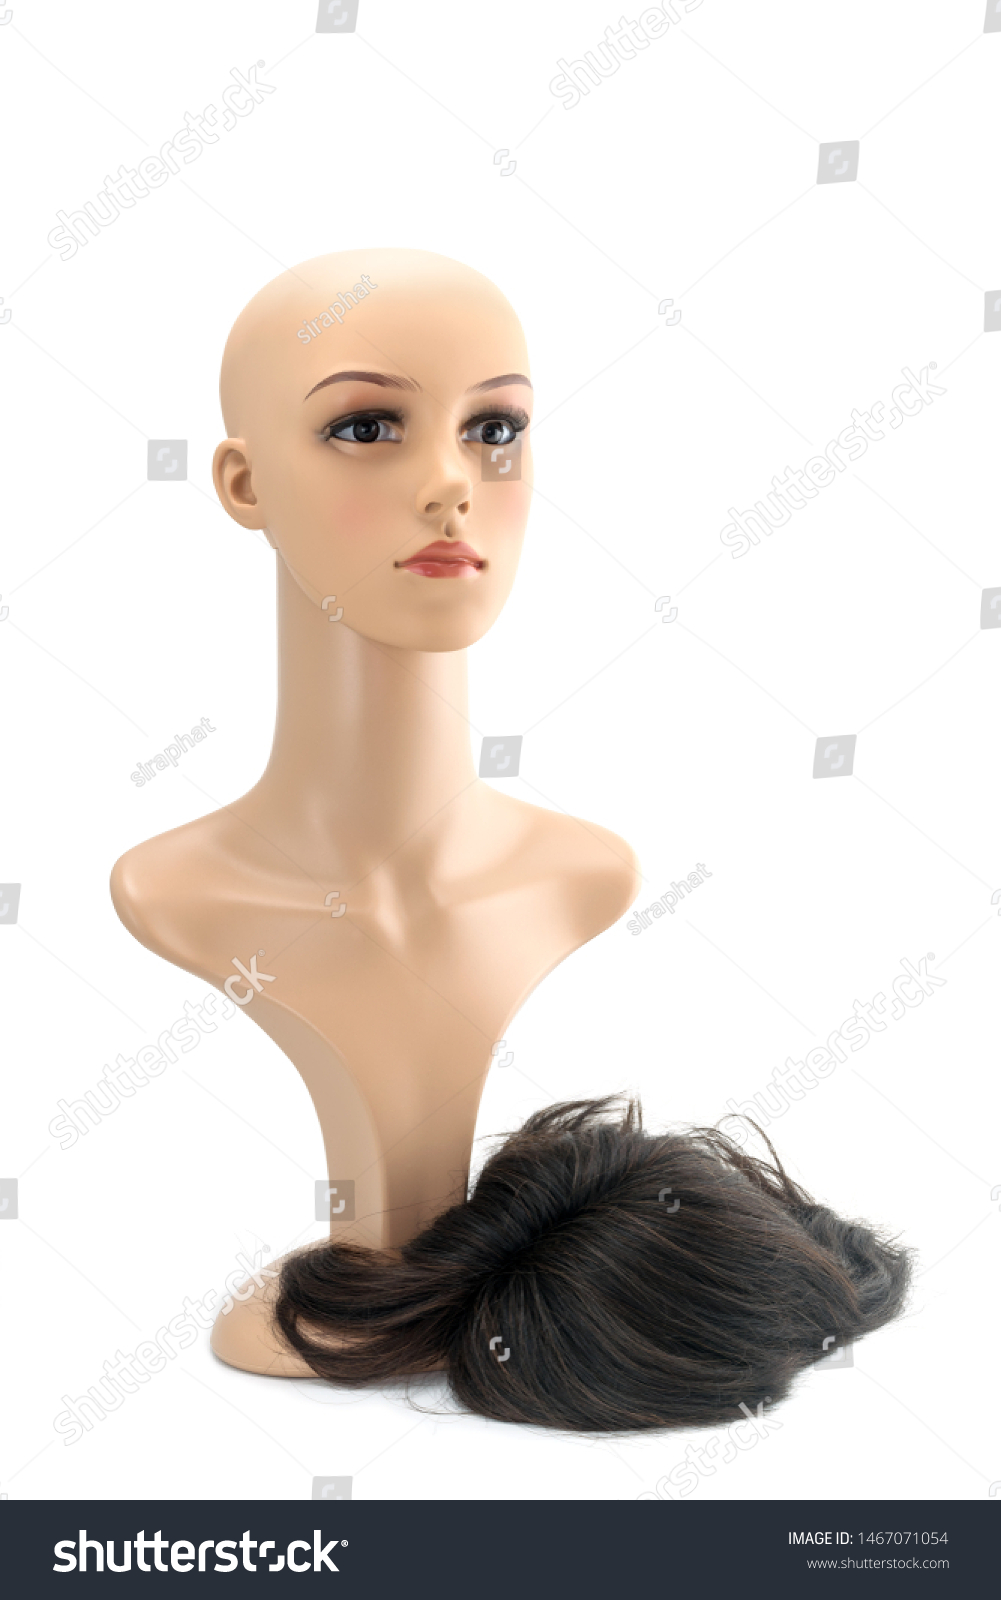 Tan Styrofoam Head with Elongated Neck Female